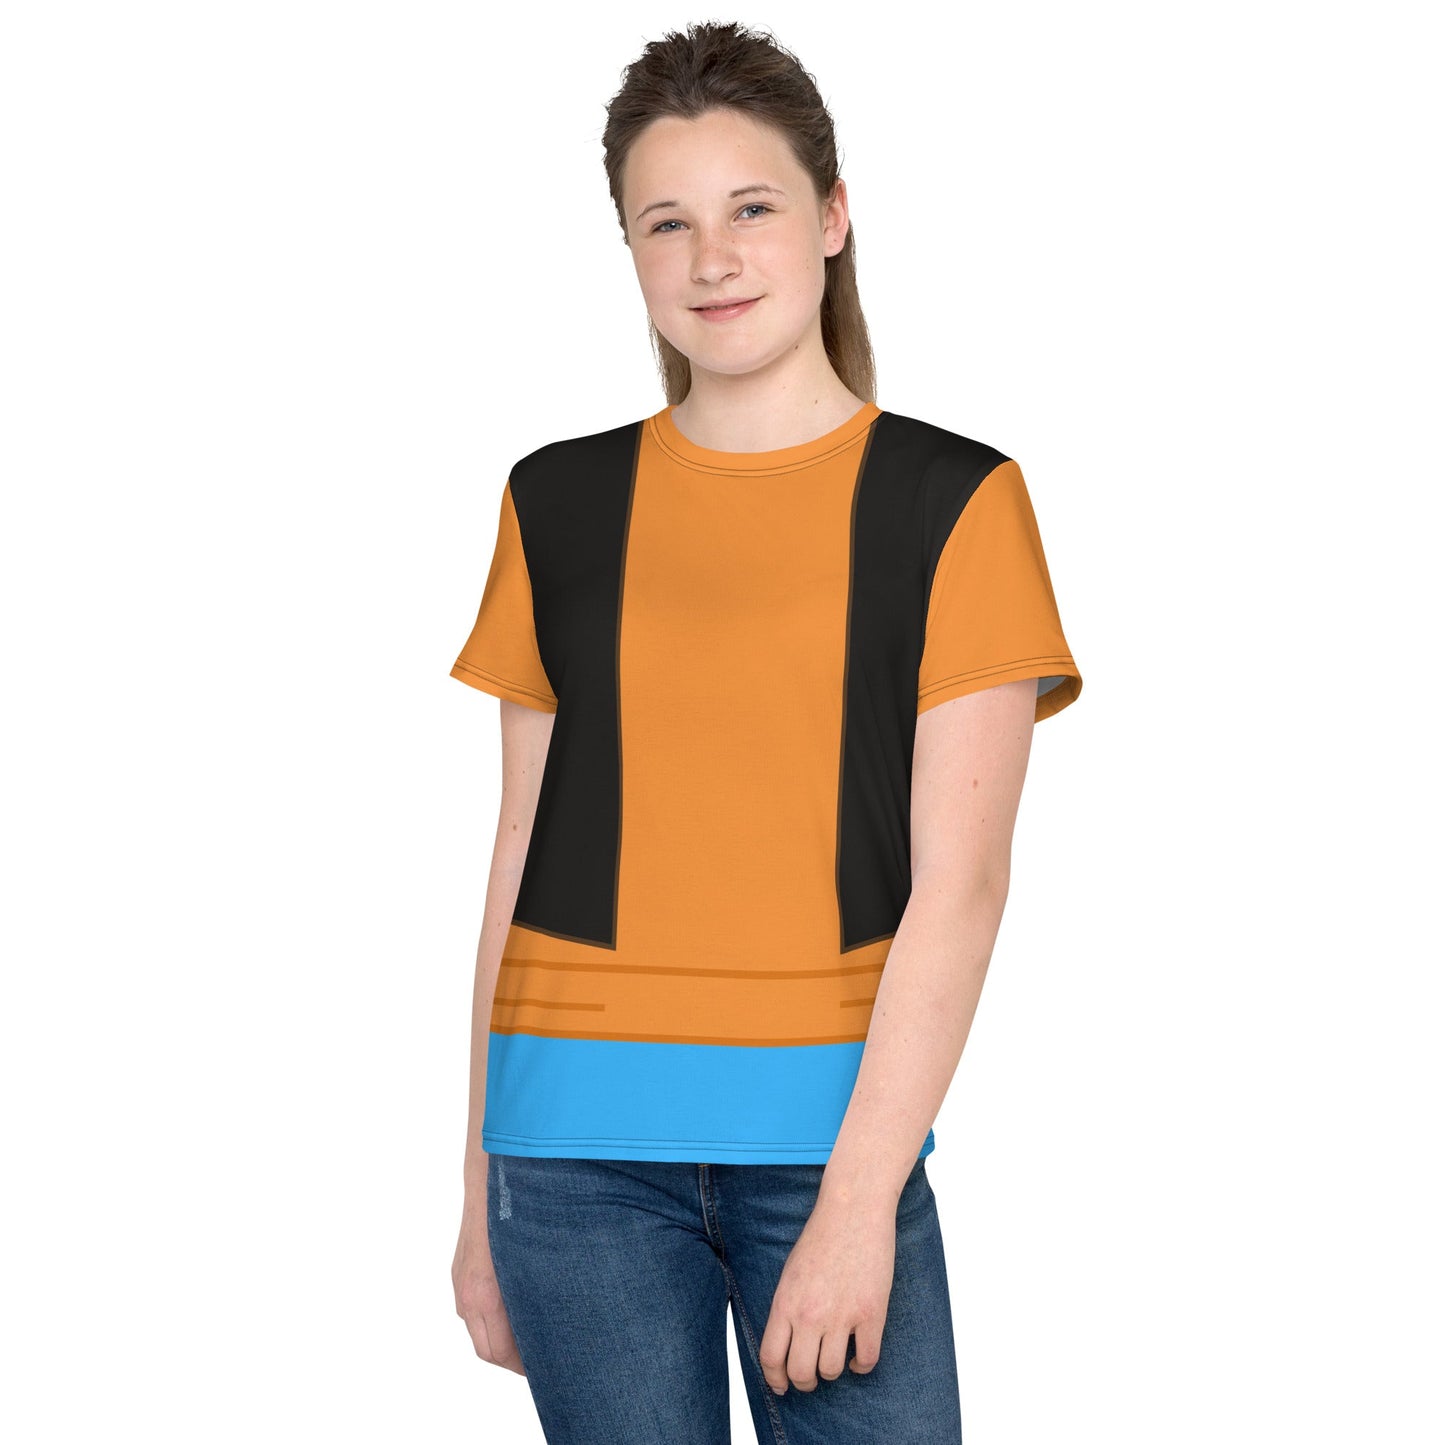 Feeling Goofy Youth crew neck t-shirt disney active weardisney boundingdisney costume#tag4##tag5##tag6#